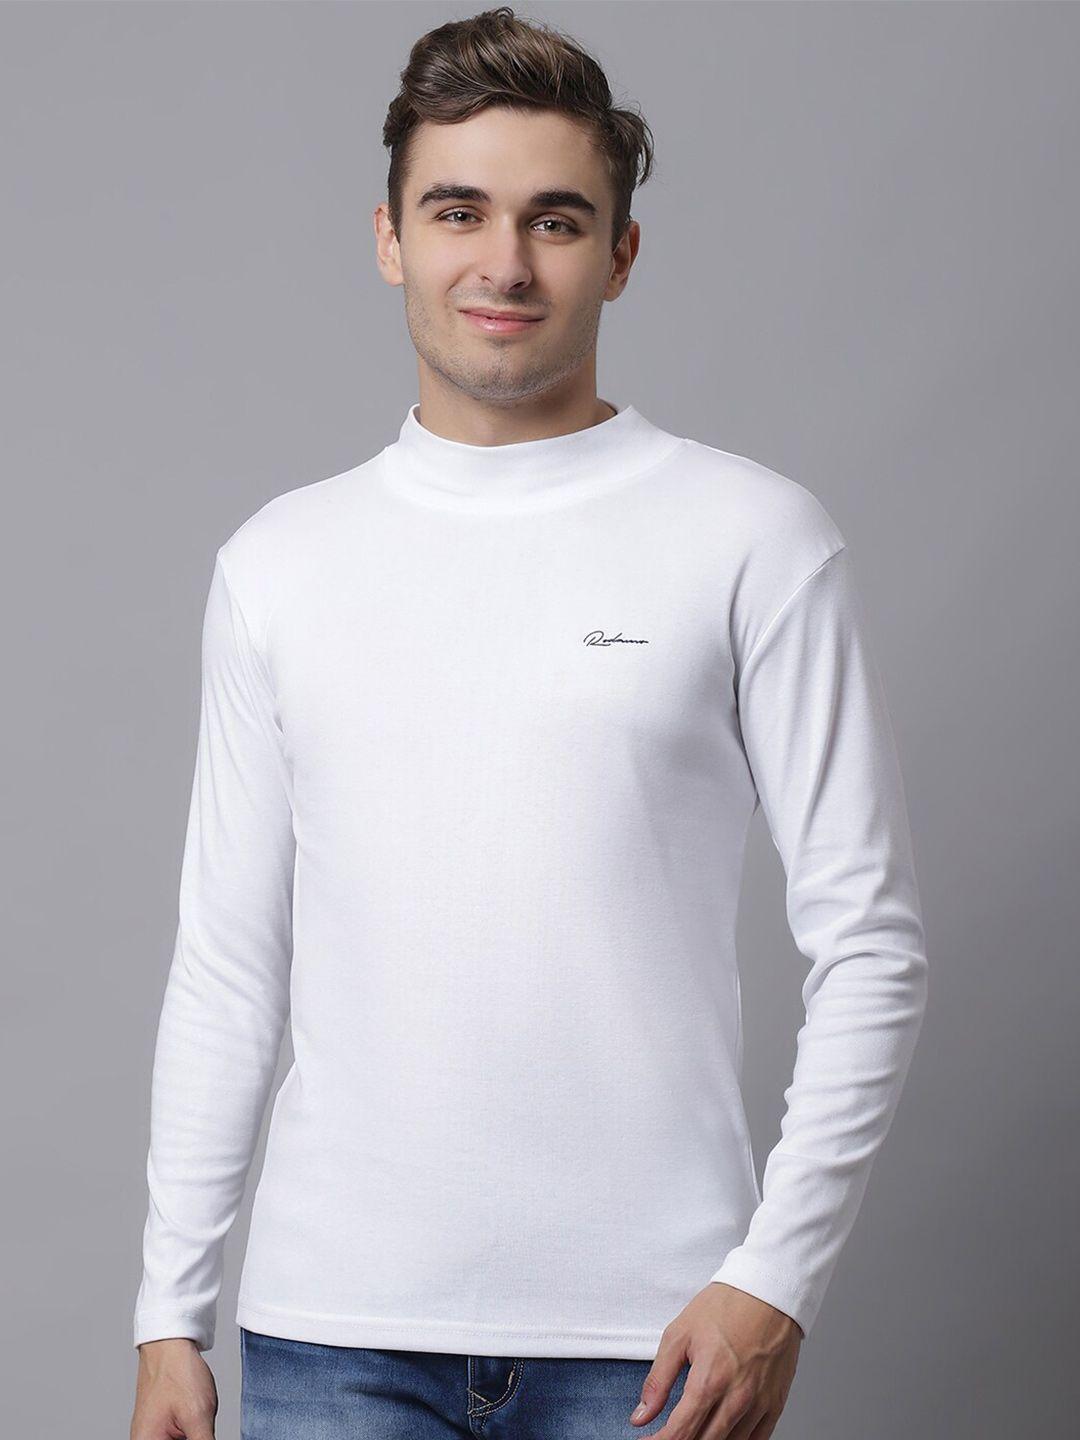 rodamo men white high neck slim fit cotton t-shirt